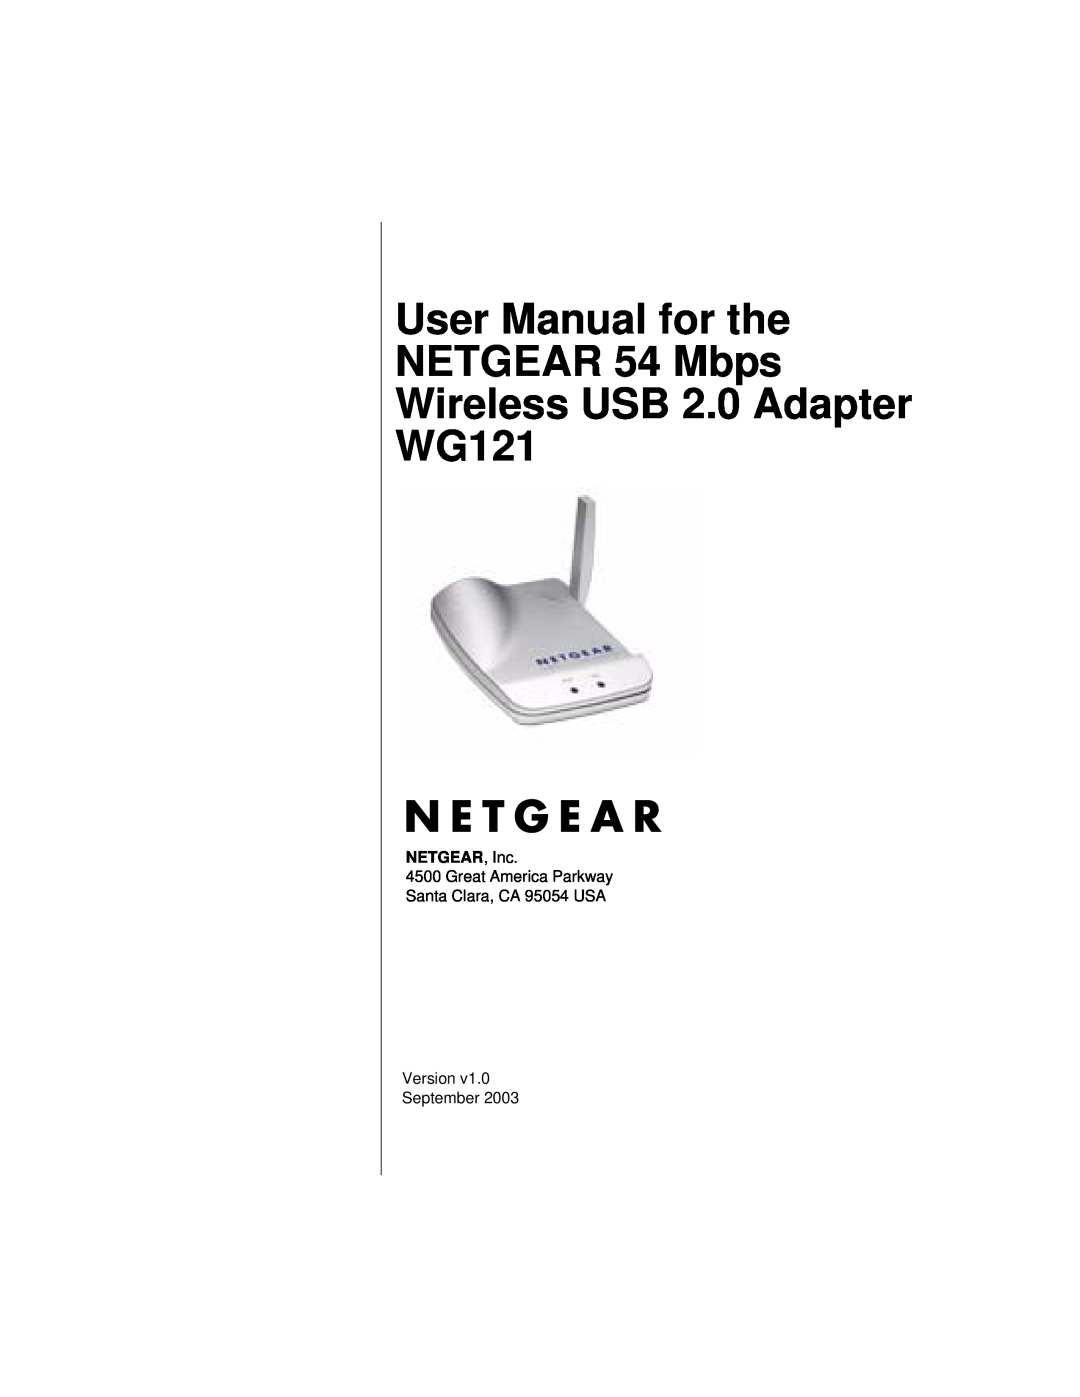 NETGEAR user manual User Manual for the NETGEAR 54 Mbps Wireless USB 2.0 Adapter WG121, NETGEAR, Inc 